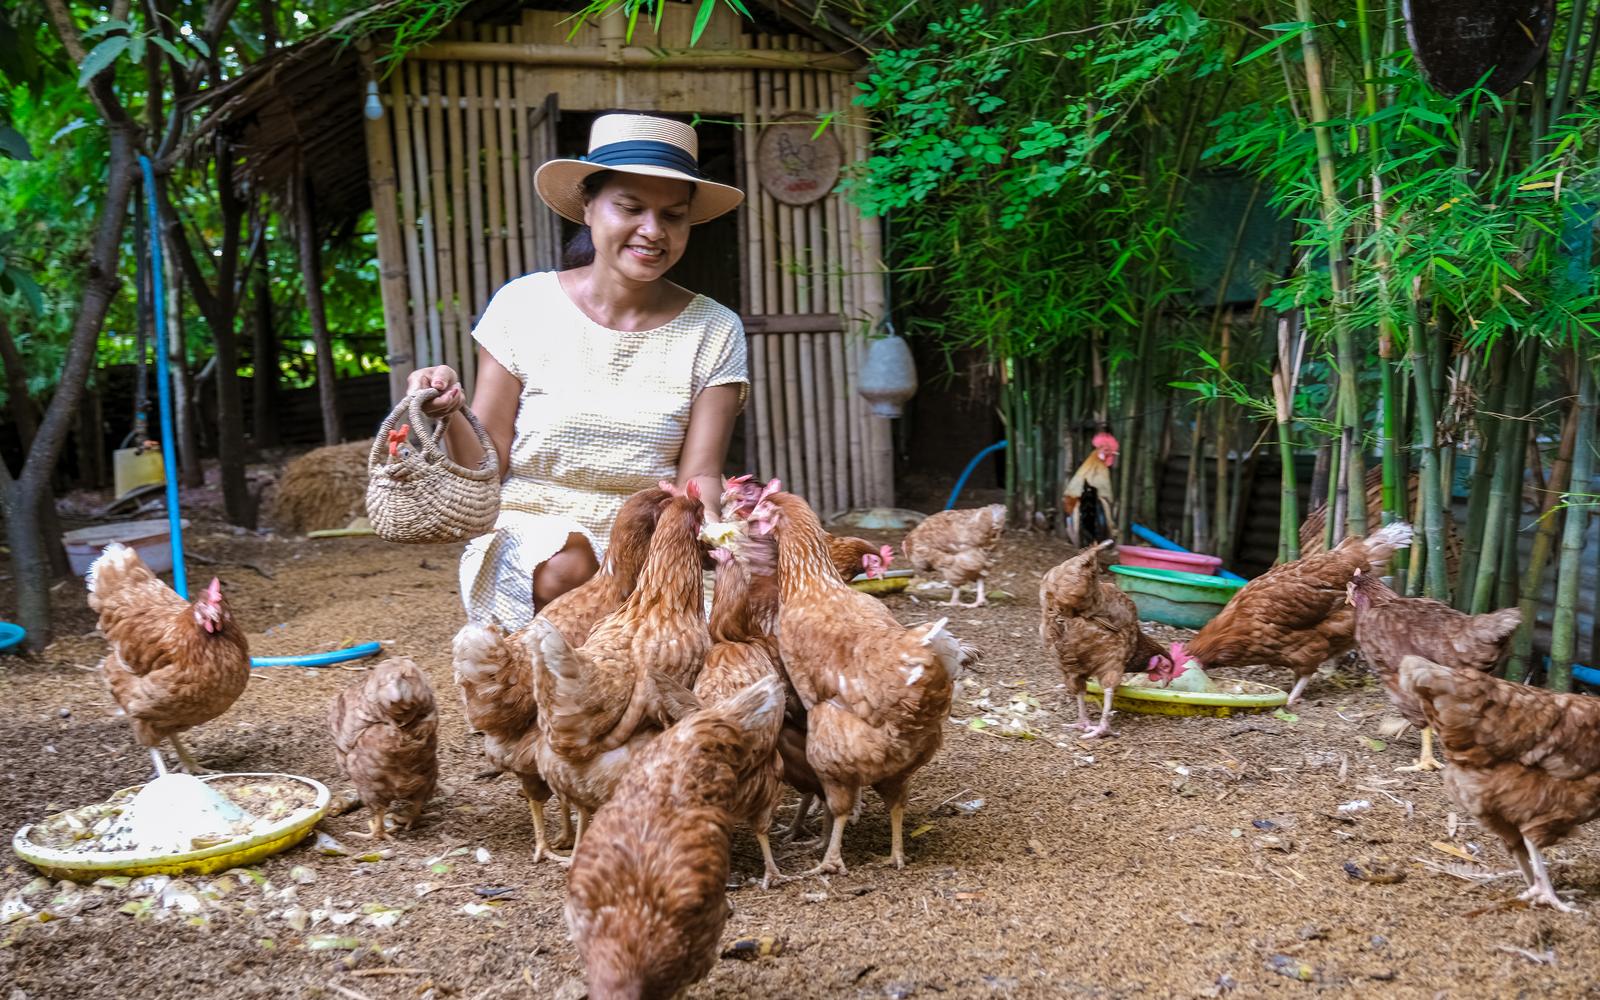 Asian women feeding chickens in Thailand.